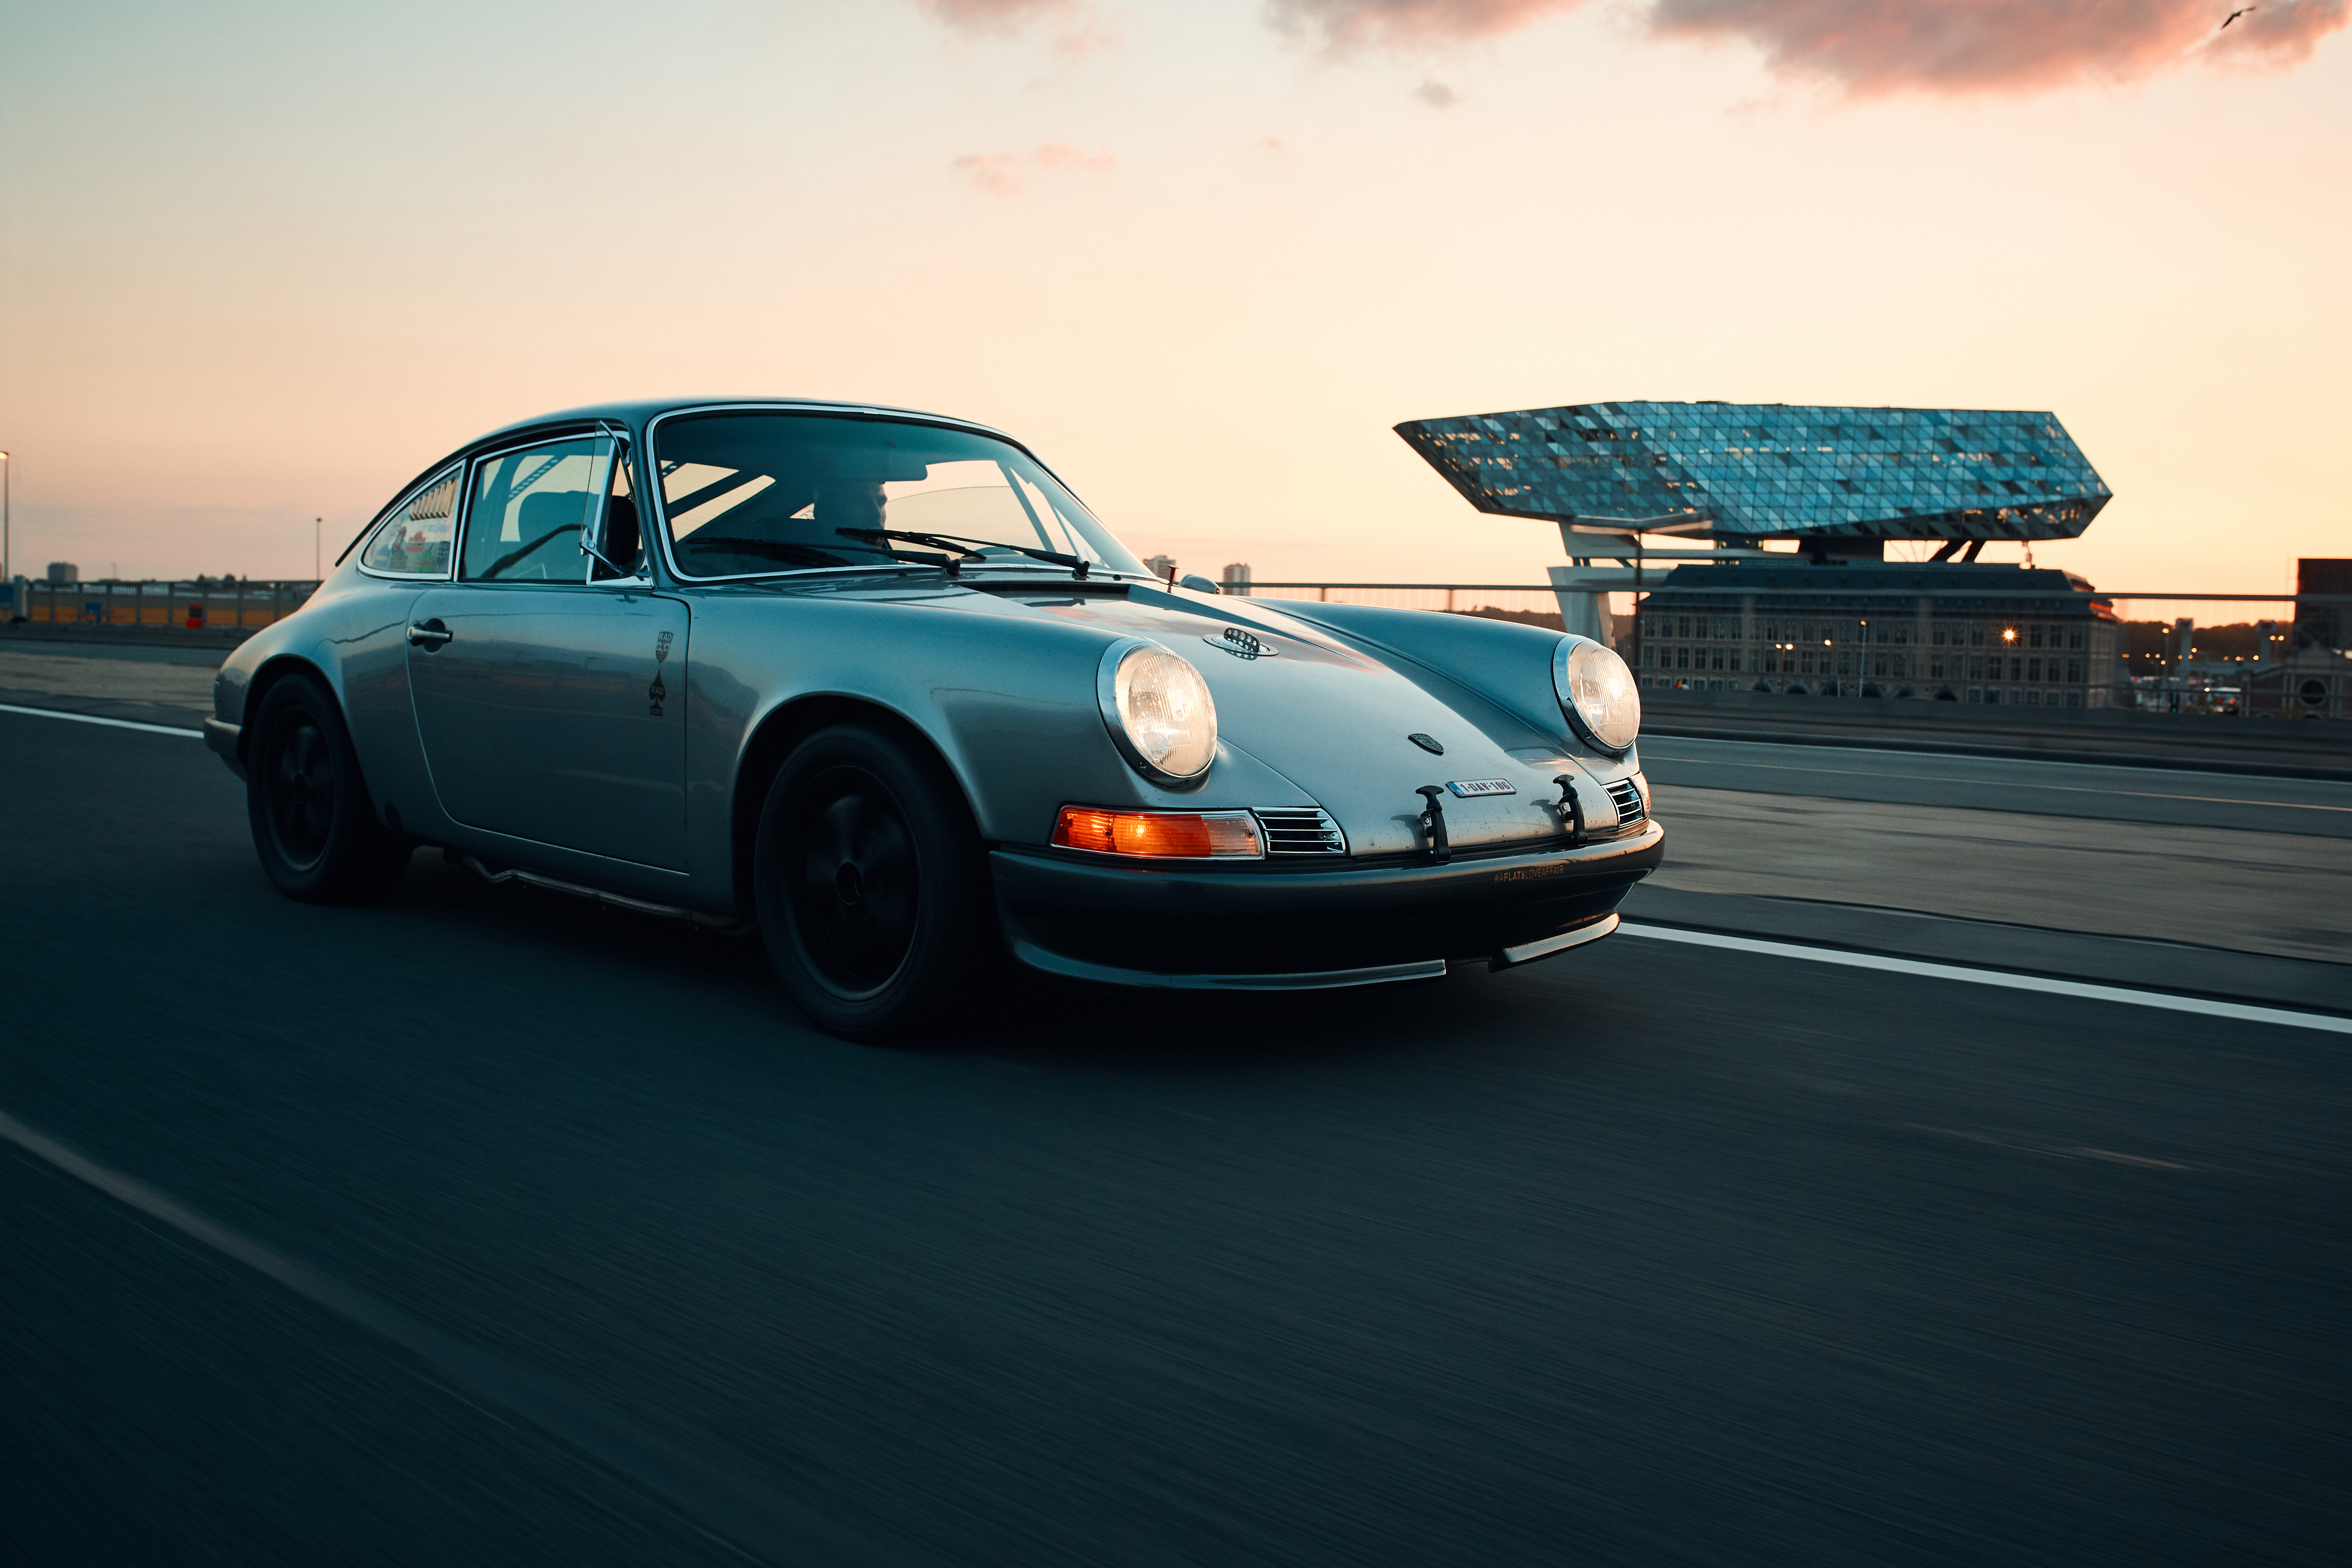 The Porsche 911 stands for timeless sports car design